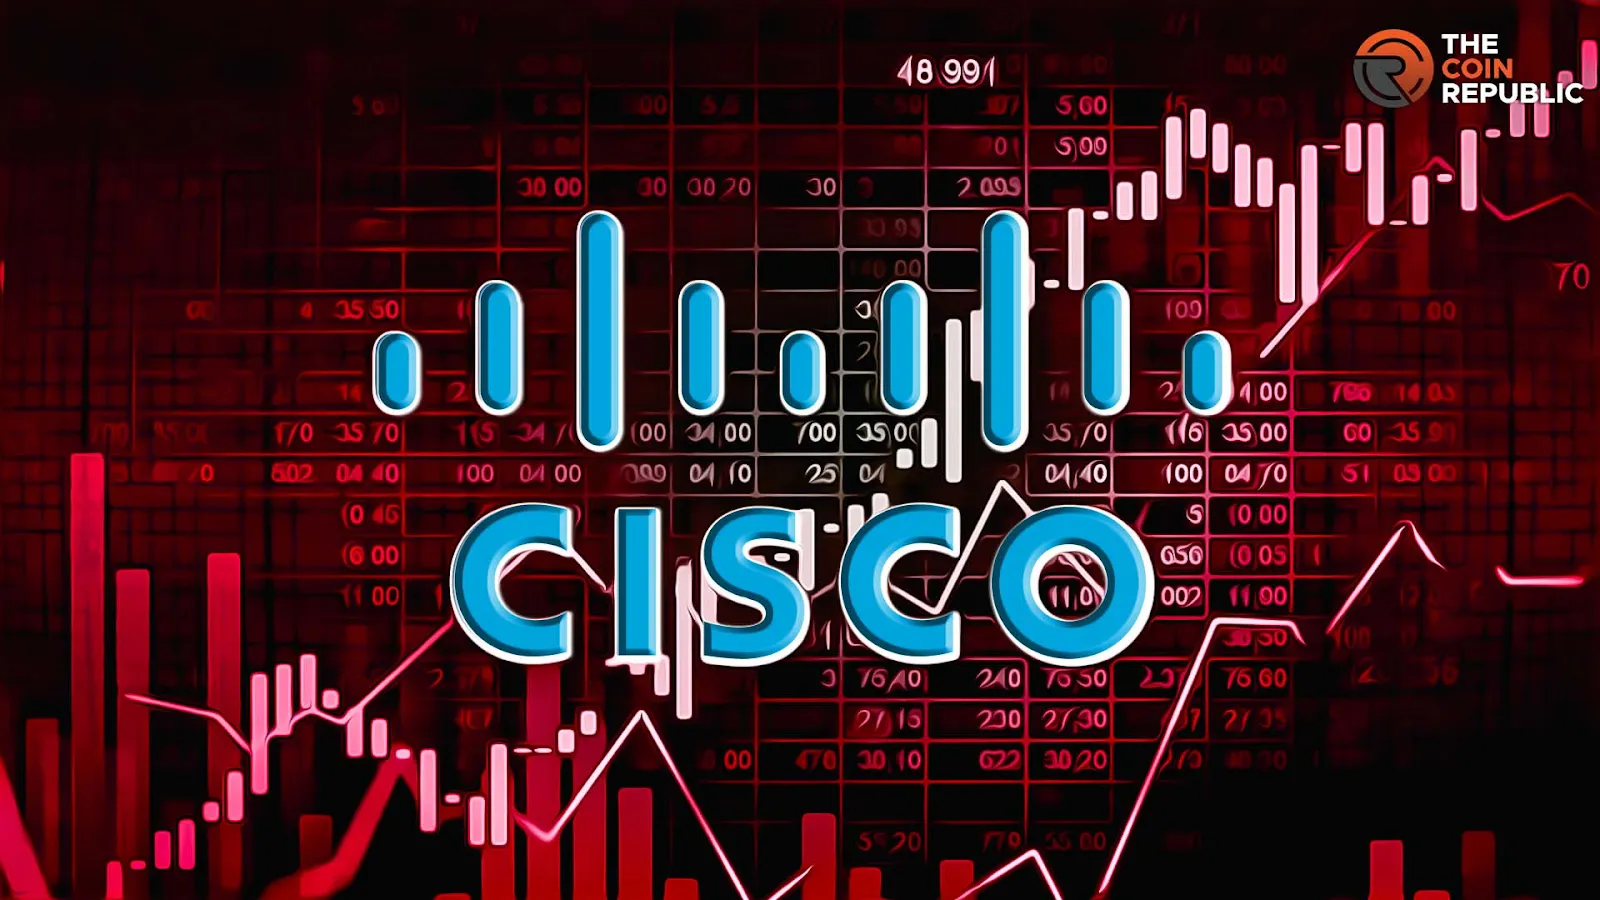 Cisco Stock Price’s Bullish Performance Dropped Yesterday